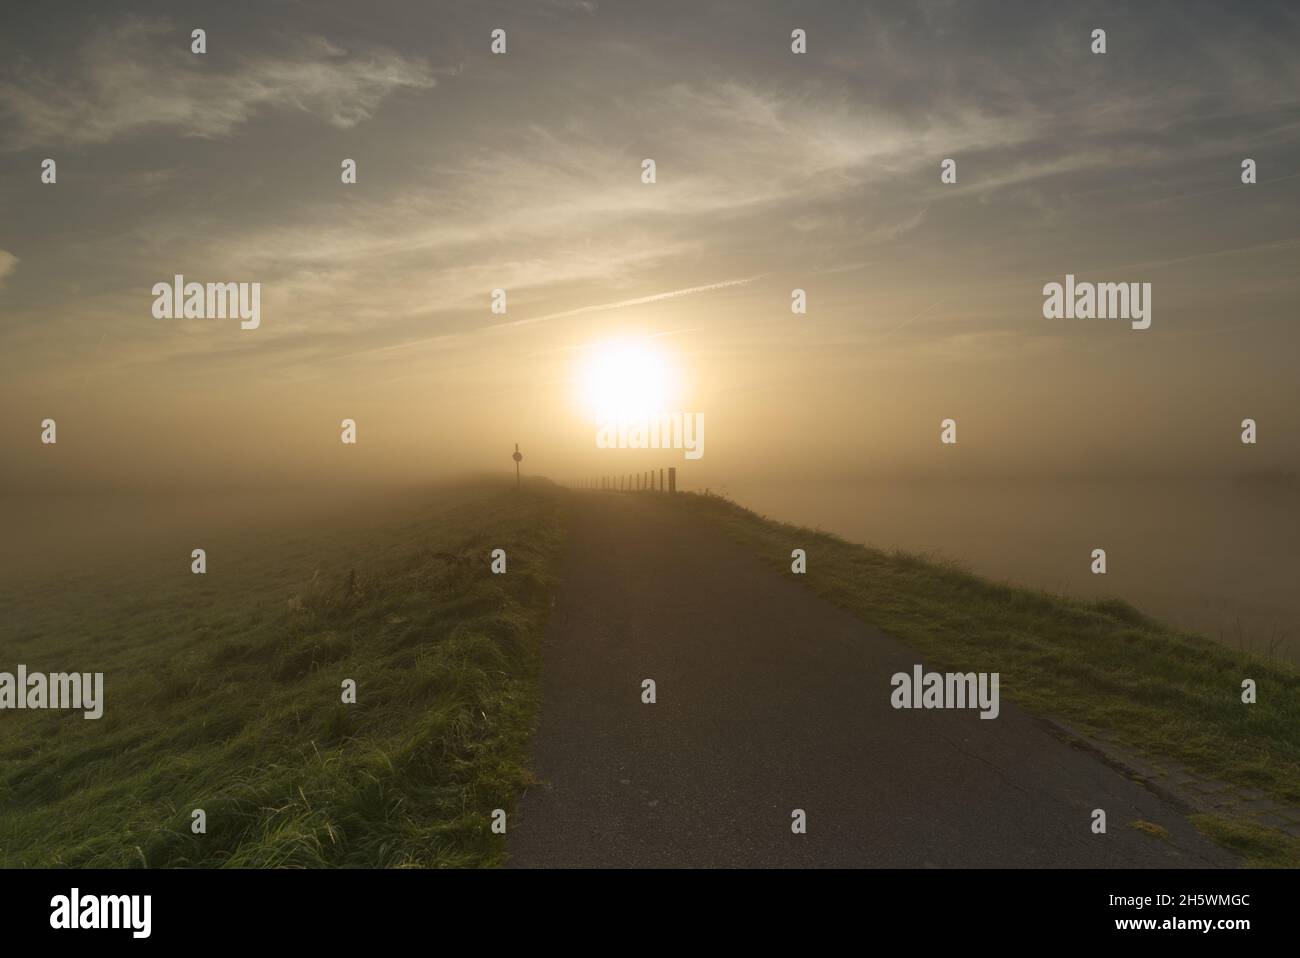 Sonnenaufgang im Nebel Foto Stock